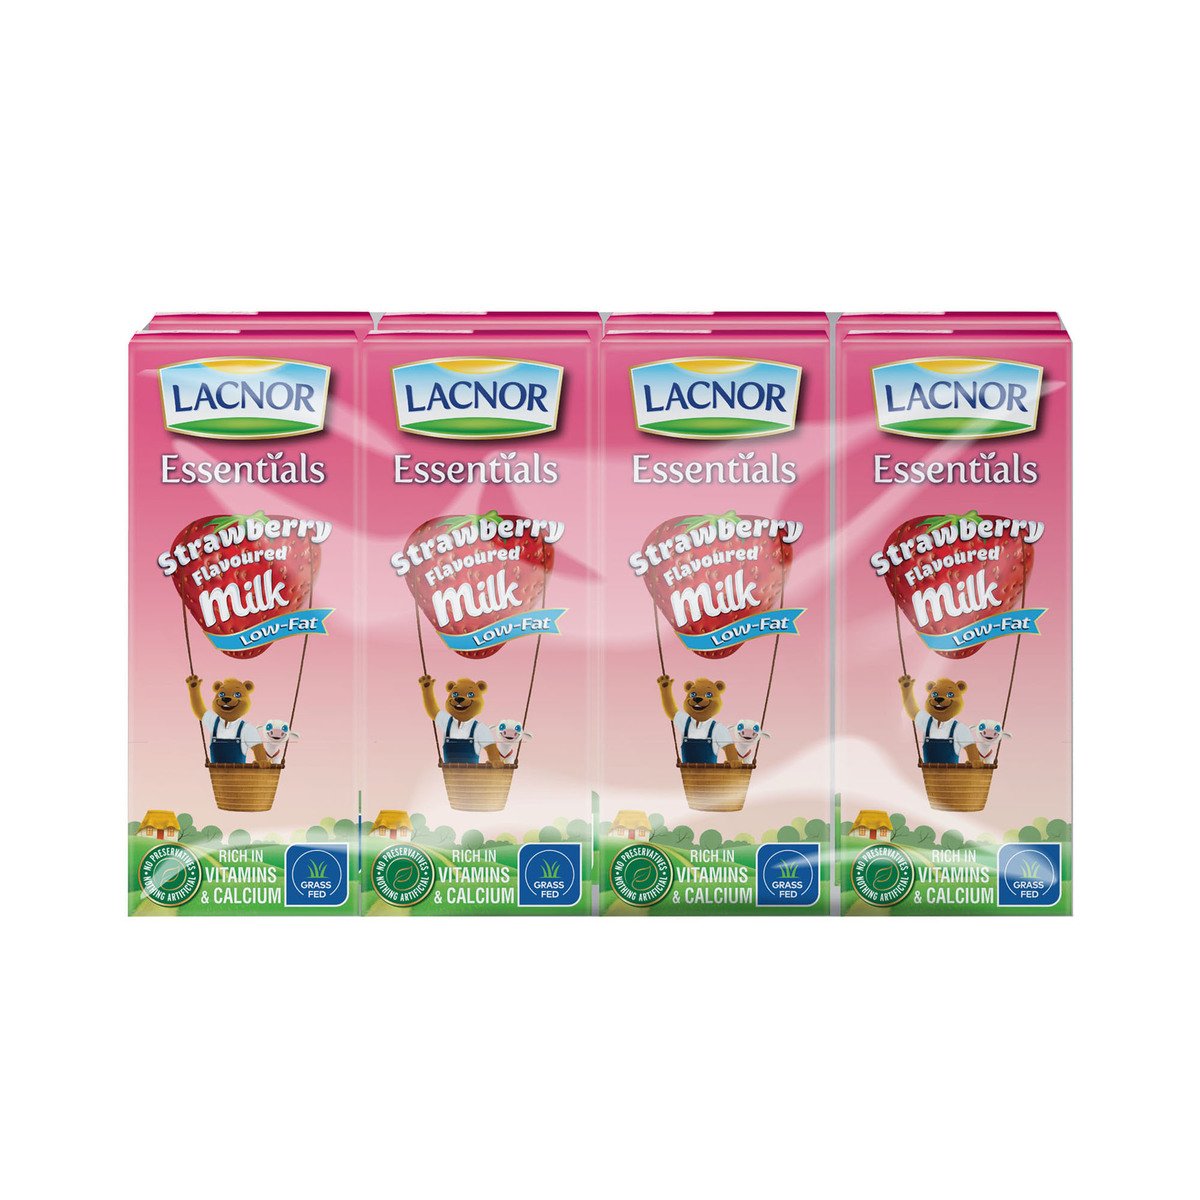 Lacnor Essentials Strawberry Flavoured Milk Low Fat 180 ml